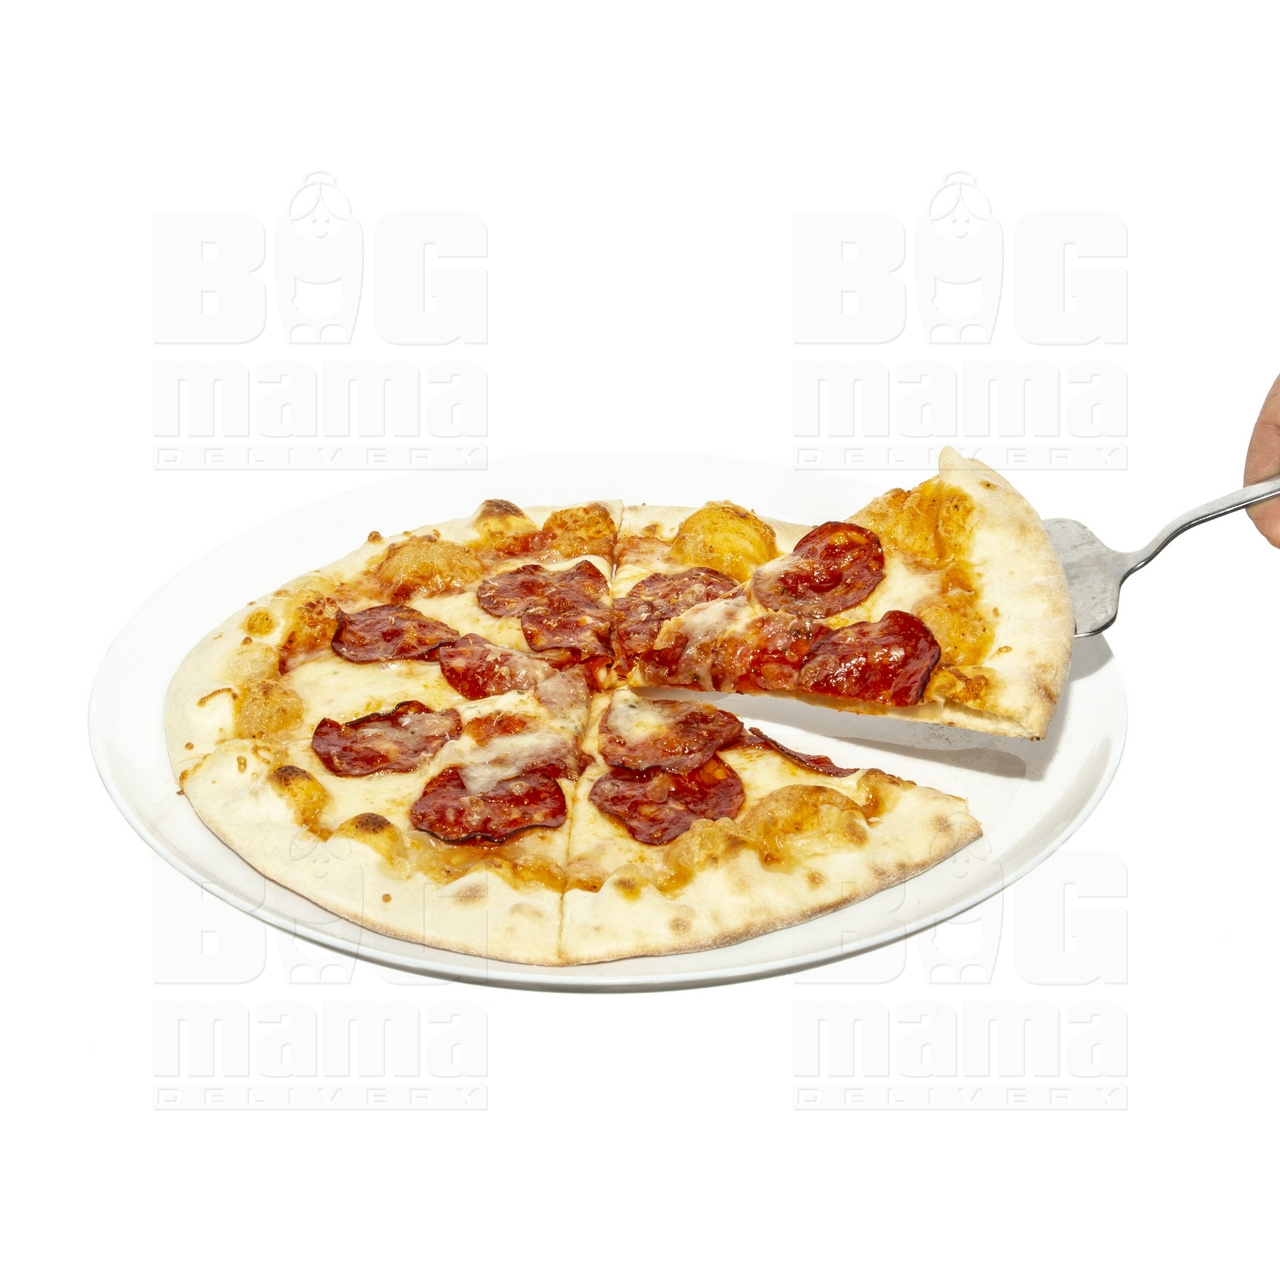 Product #207 image - Pizza Diavolo